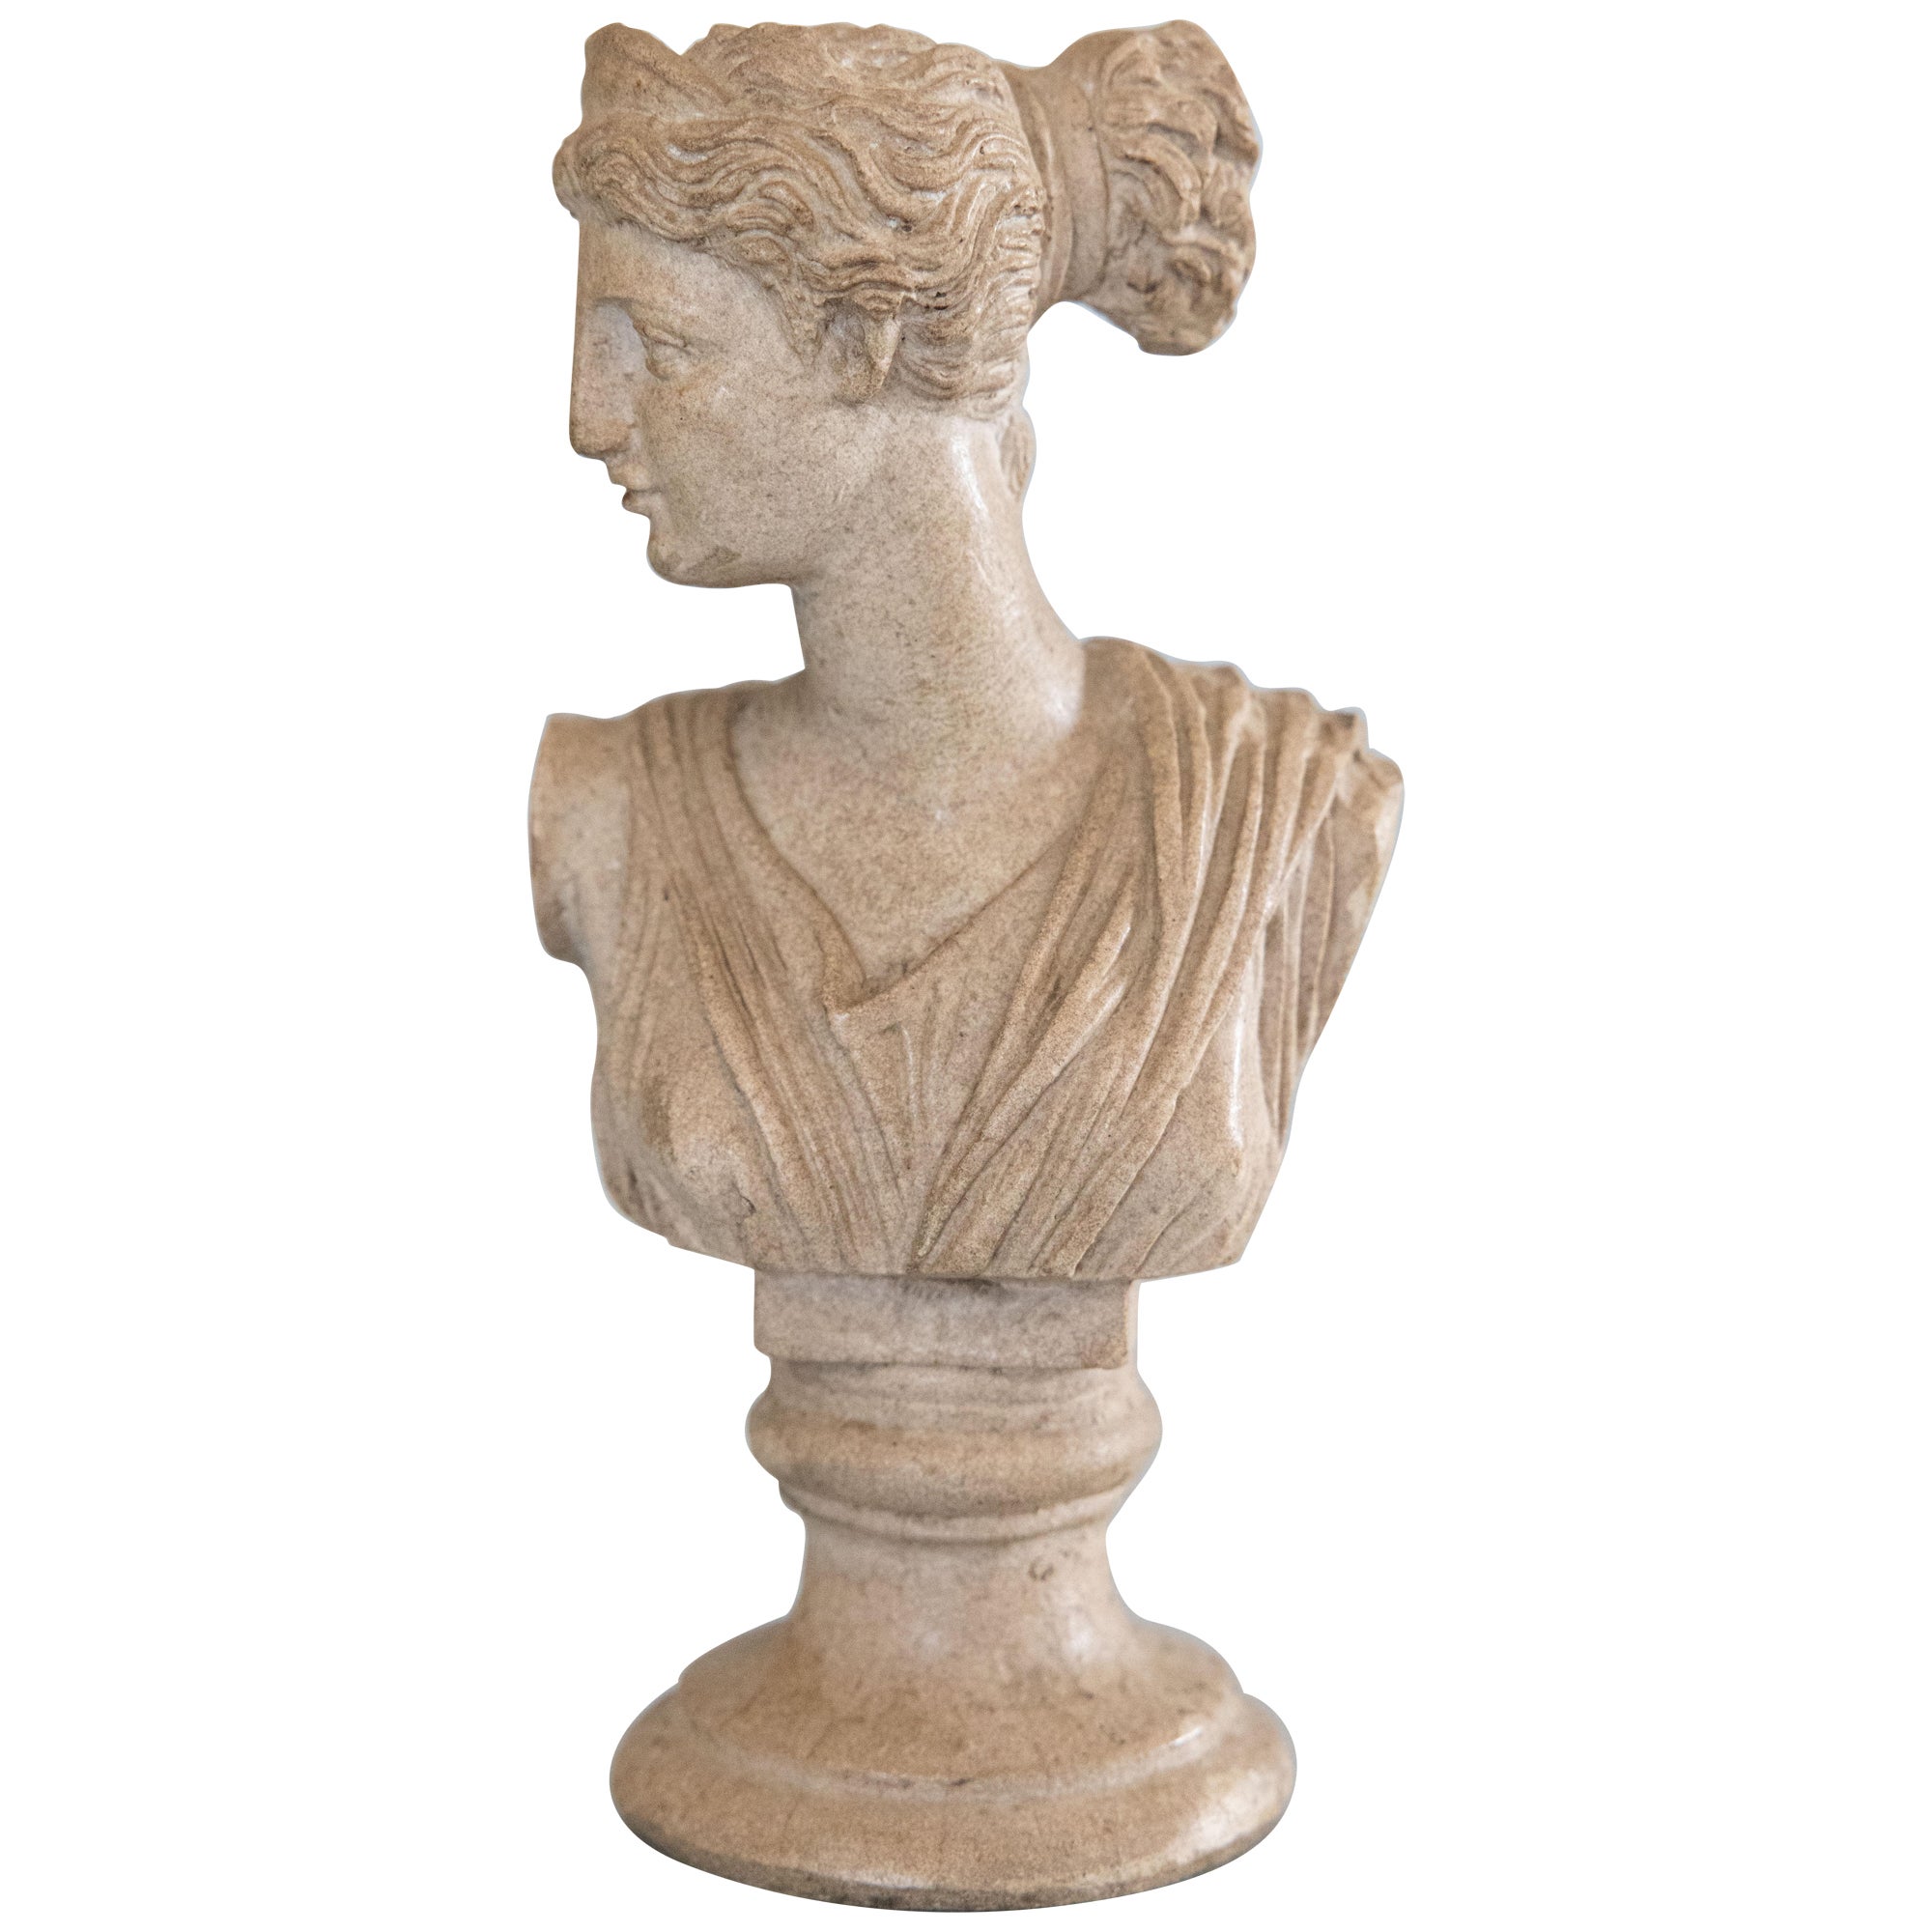 Petite Italian Grand Tour Souvenir Stone Bust of Diana of Versailles, c. 1880